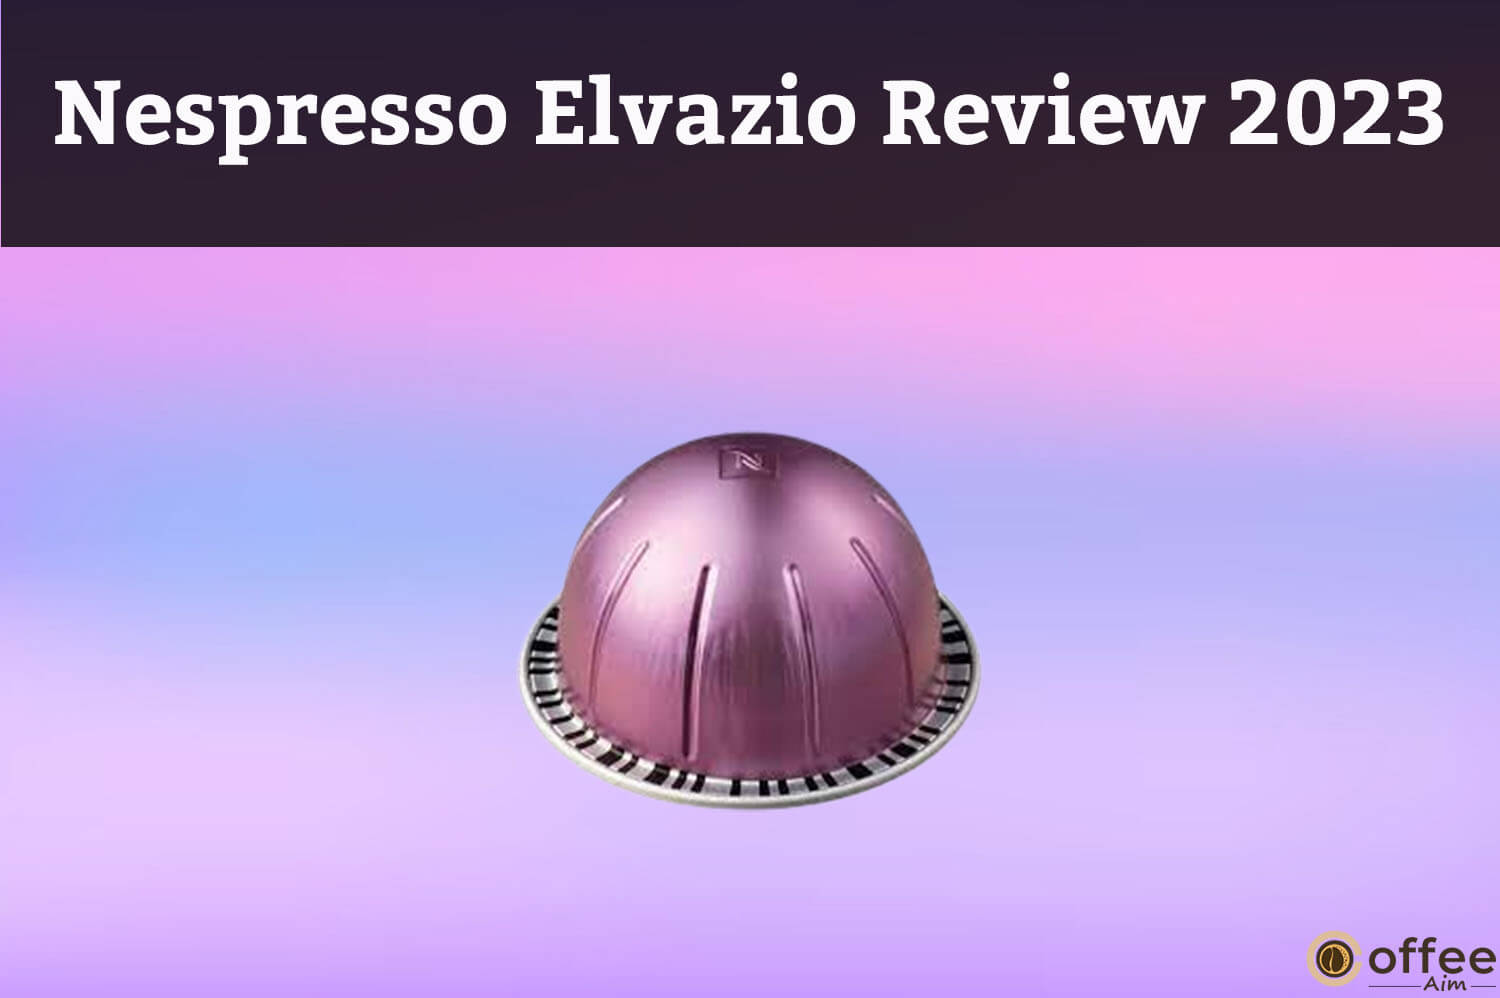 Featured image for the article "Nespresso Elvazio Review 2023"